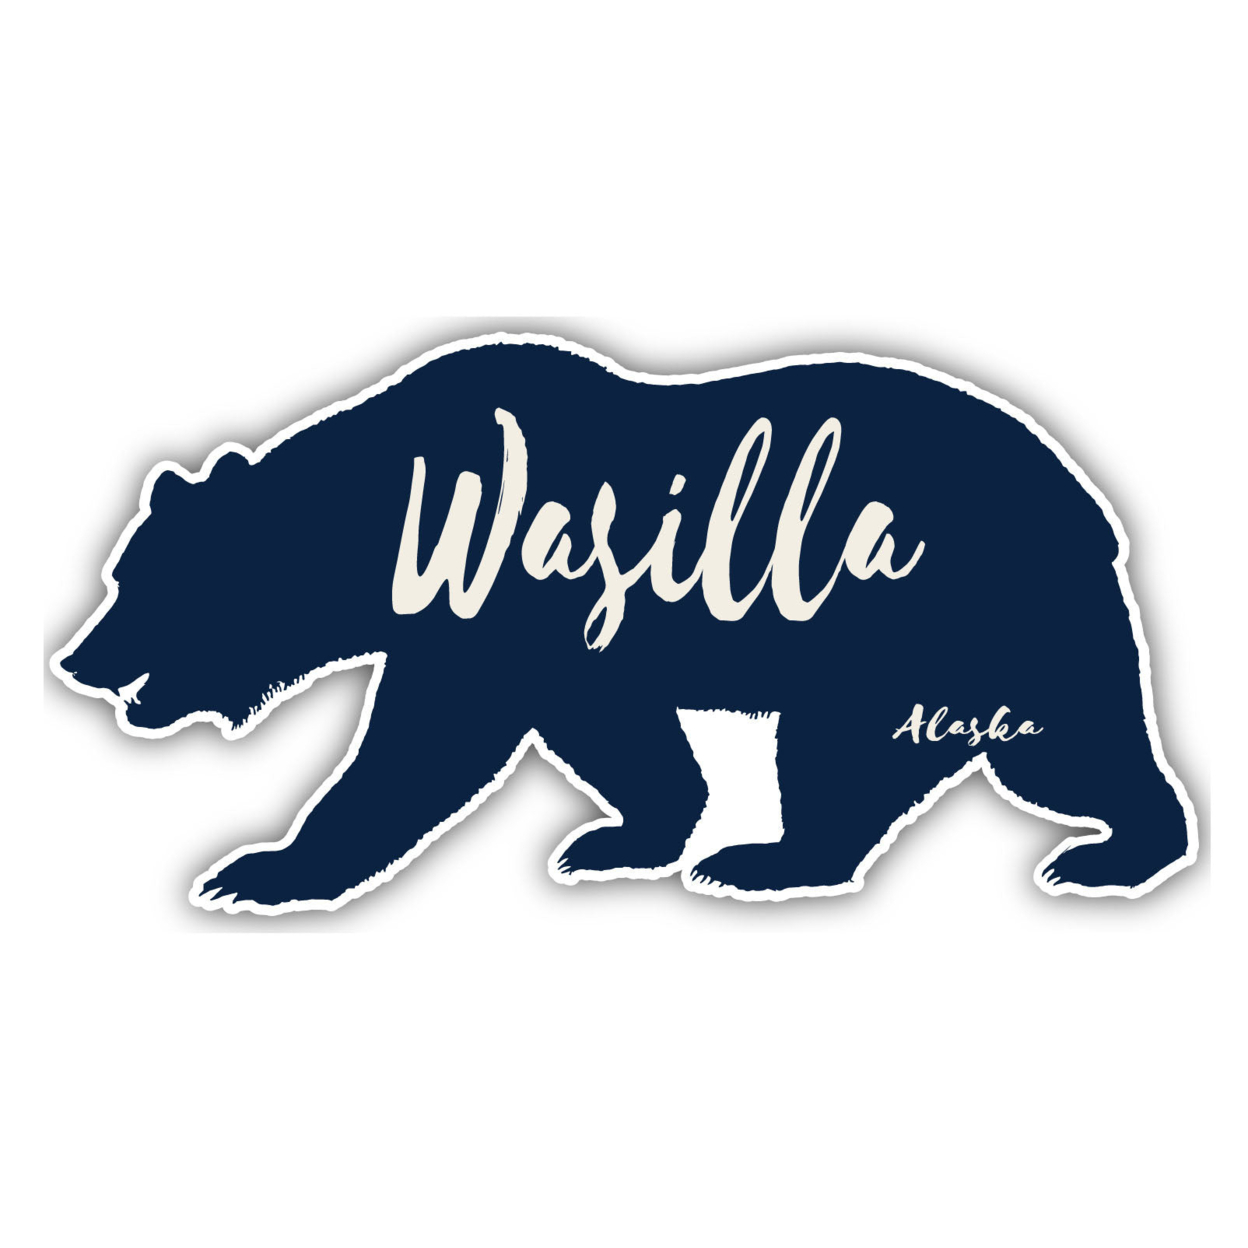 Wasilla Alaska Souvenir Decorative Stickers (Choose Theme And Size) - Single Unit, 2-Inch, Bear